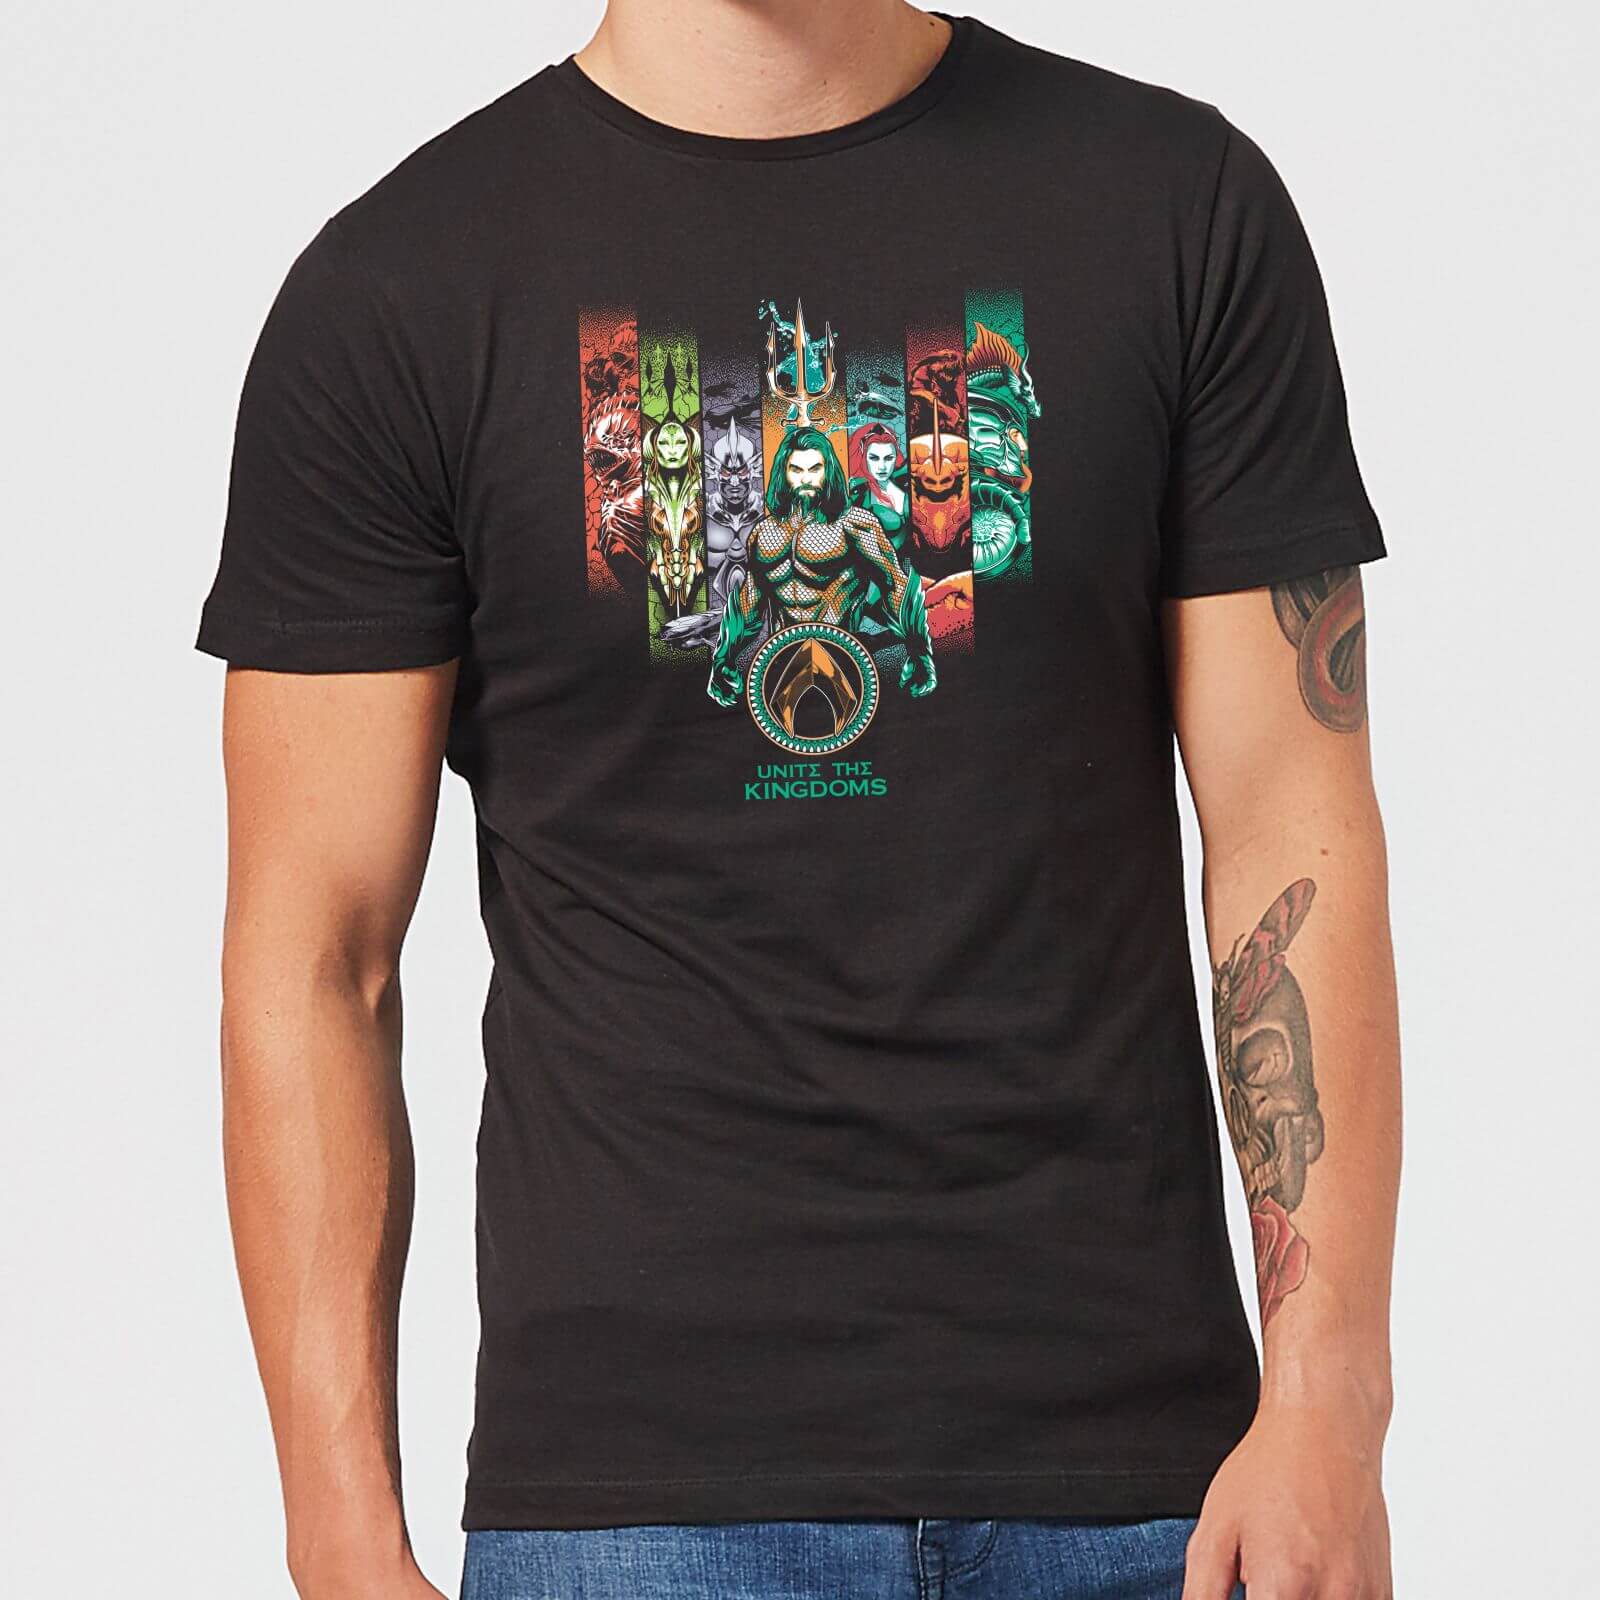 aquaman unite the kingdoms men's t-shirt - black - xxl - nero